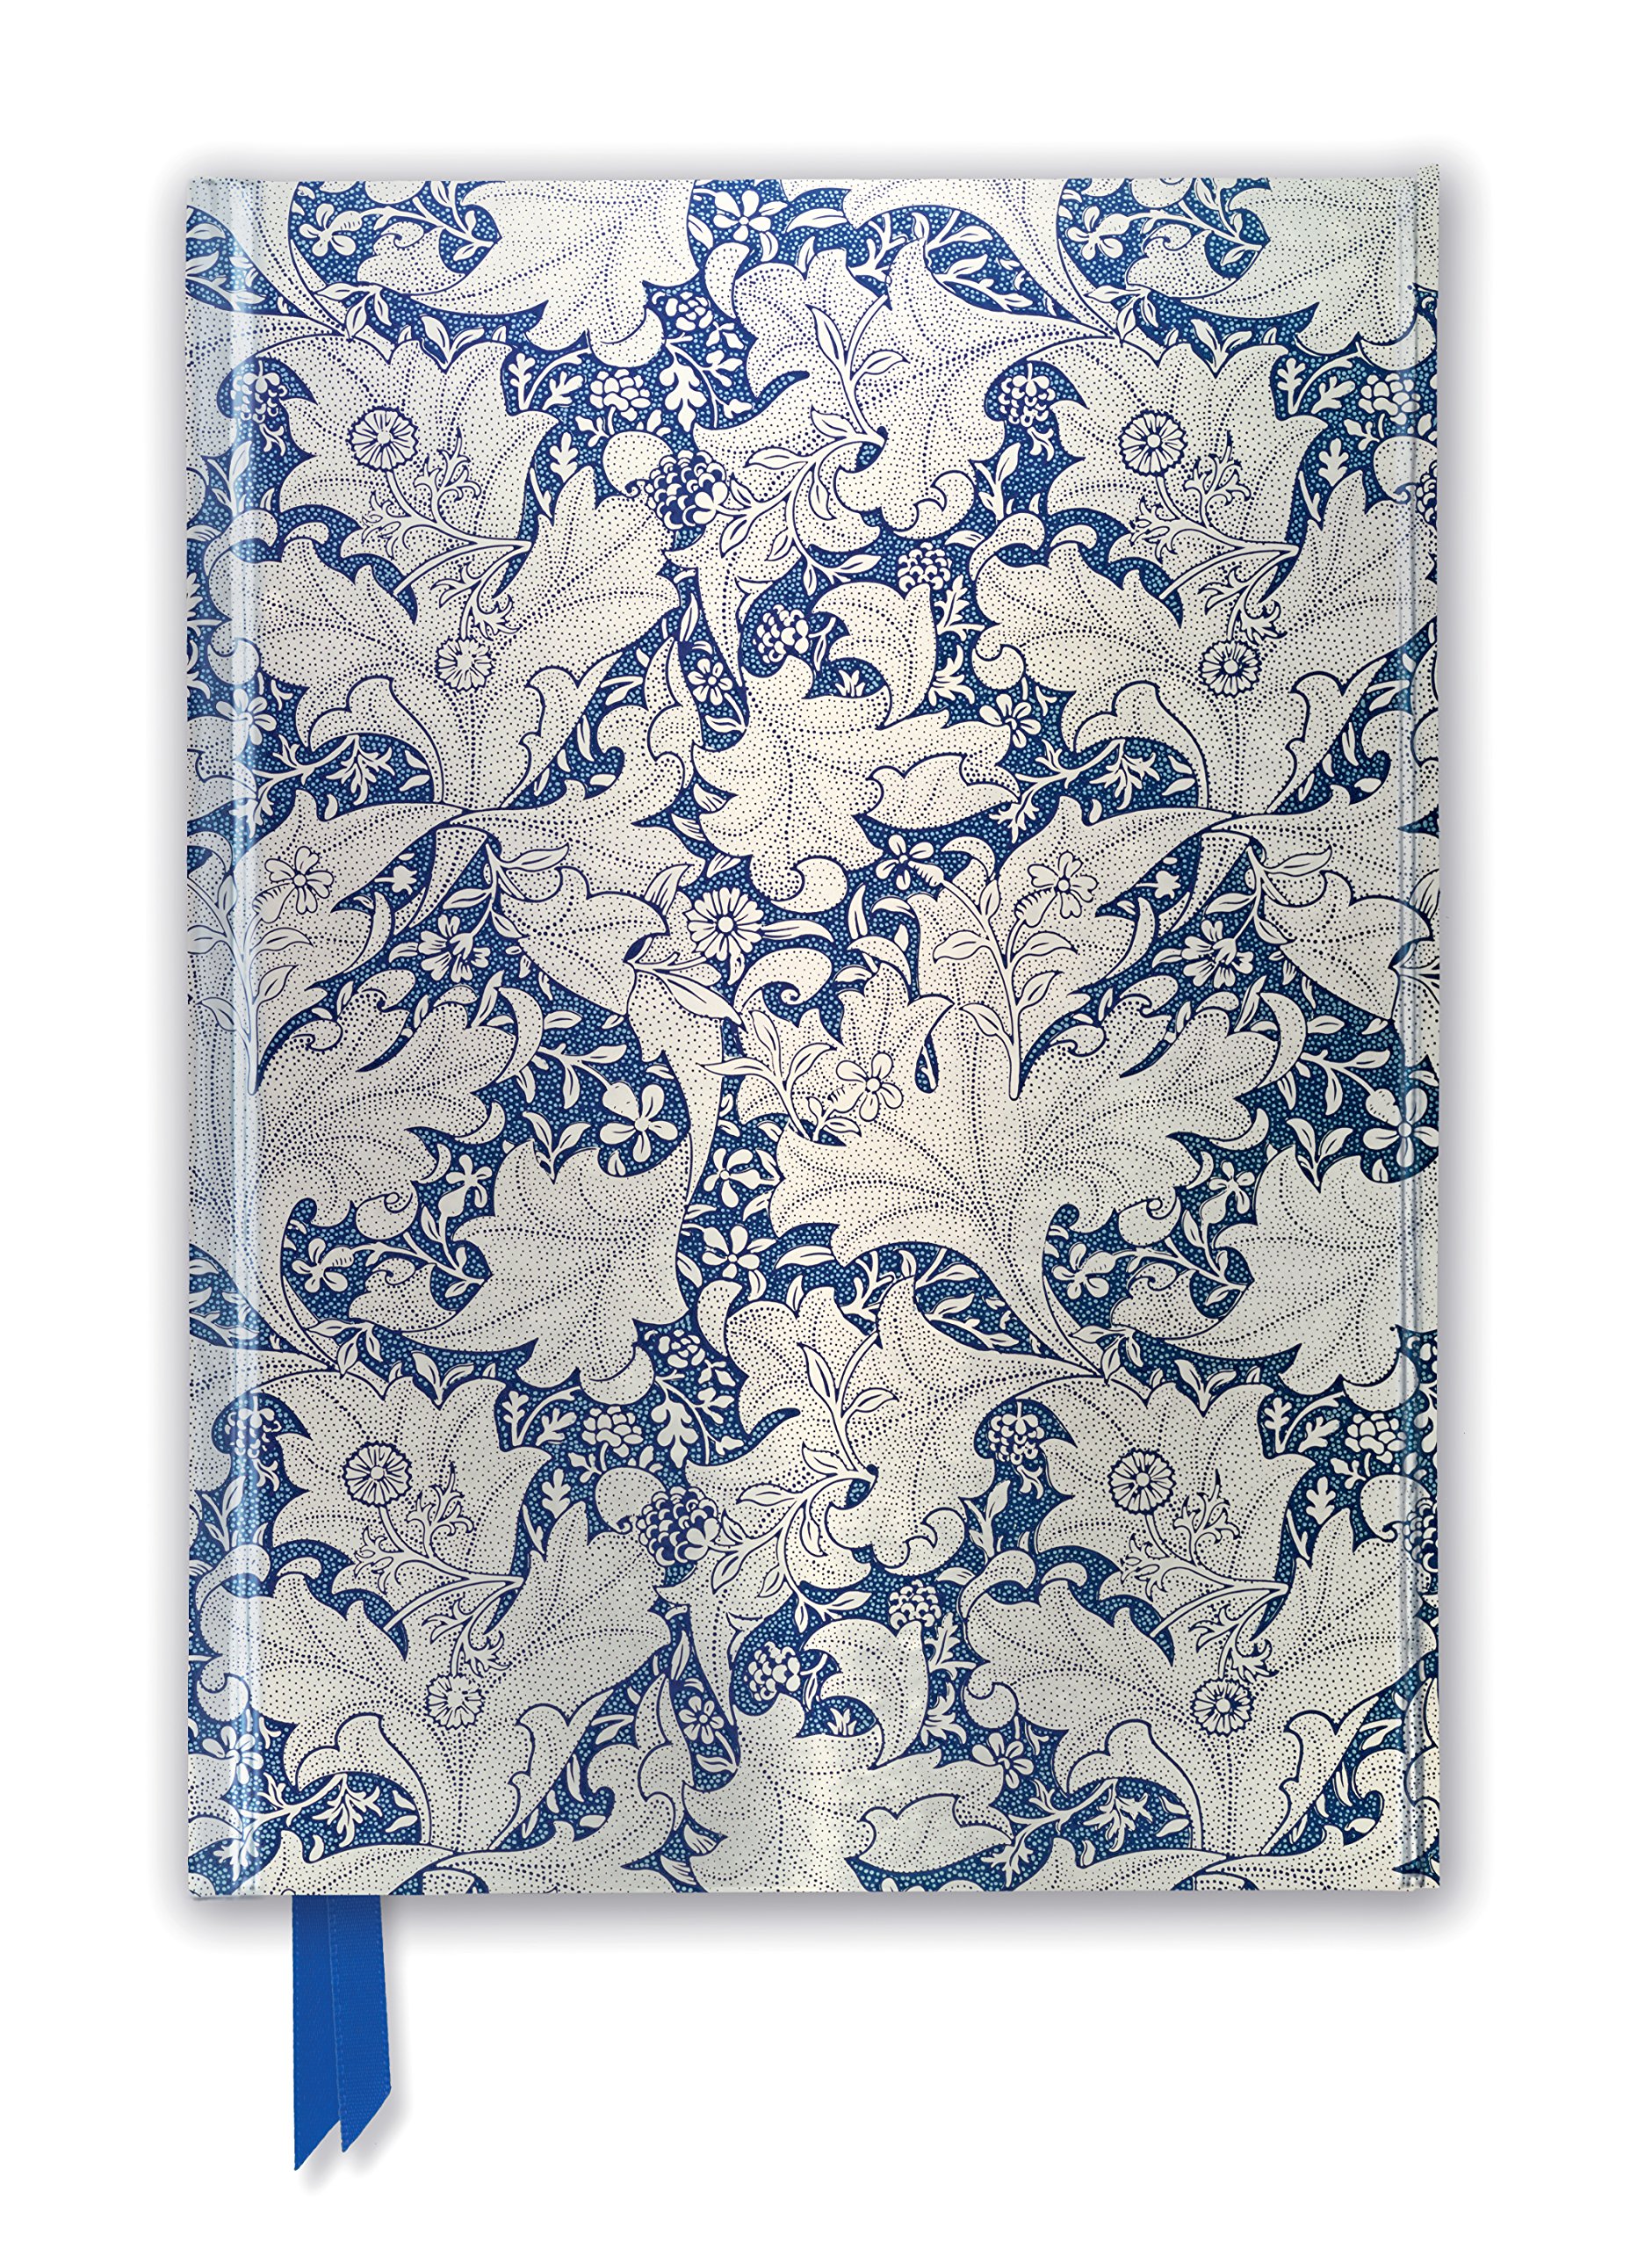 William Morris Wallflower - HD Wallpaper 